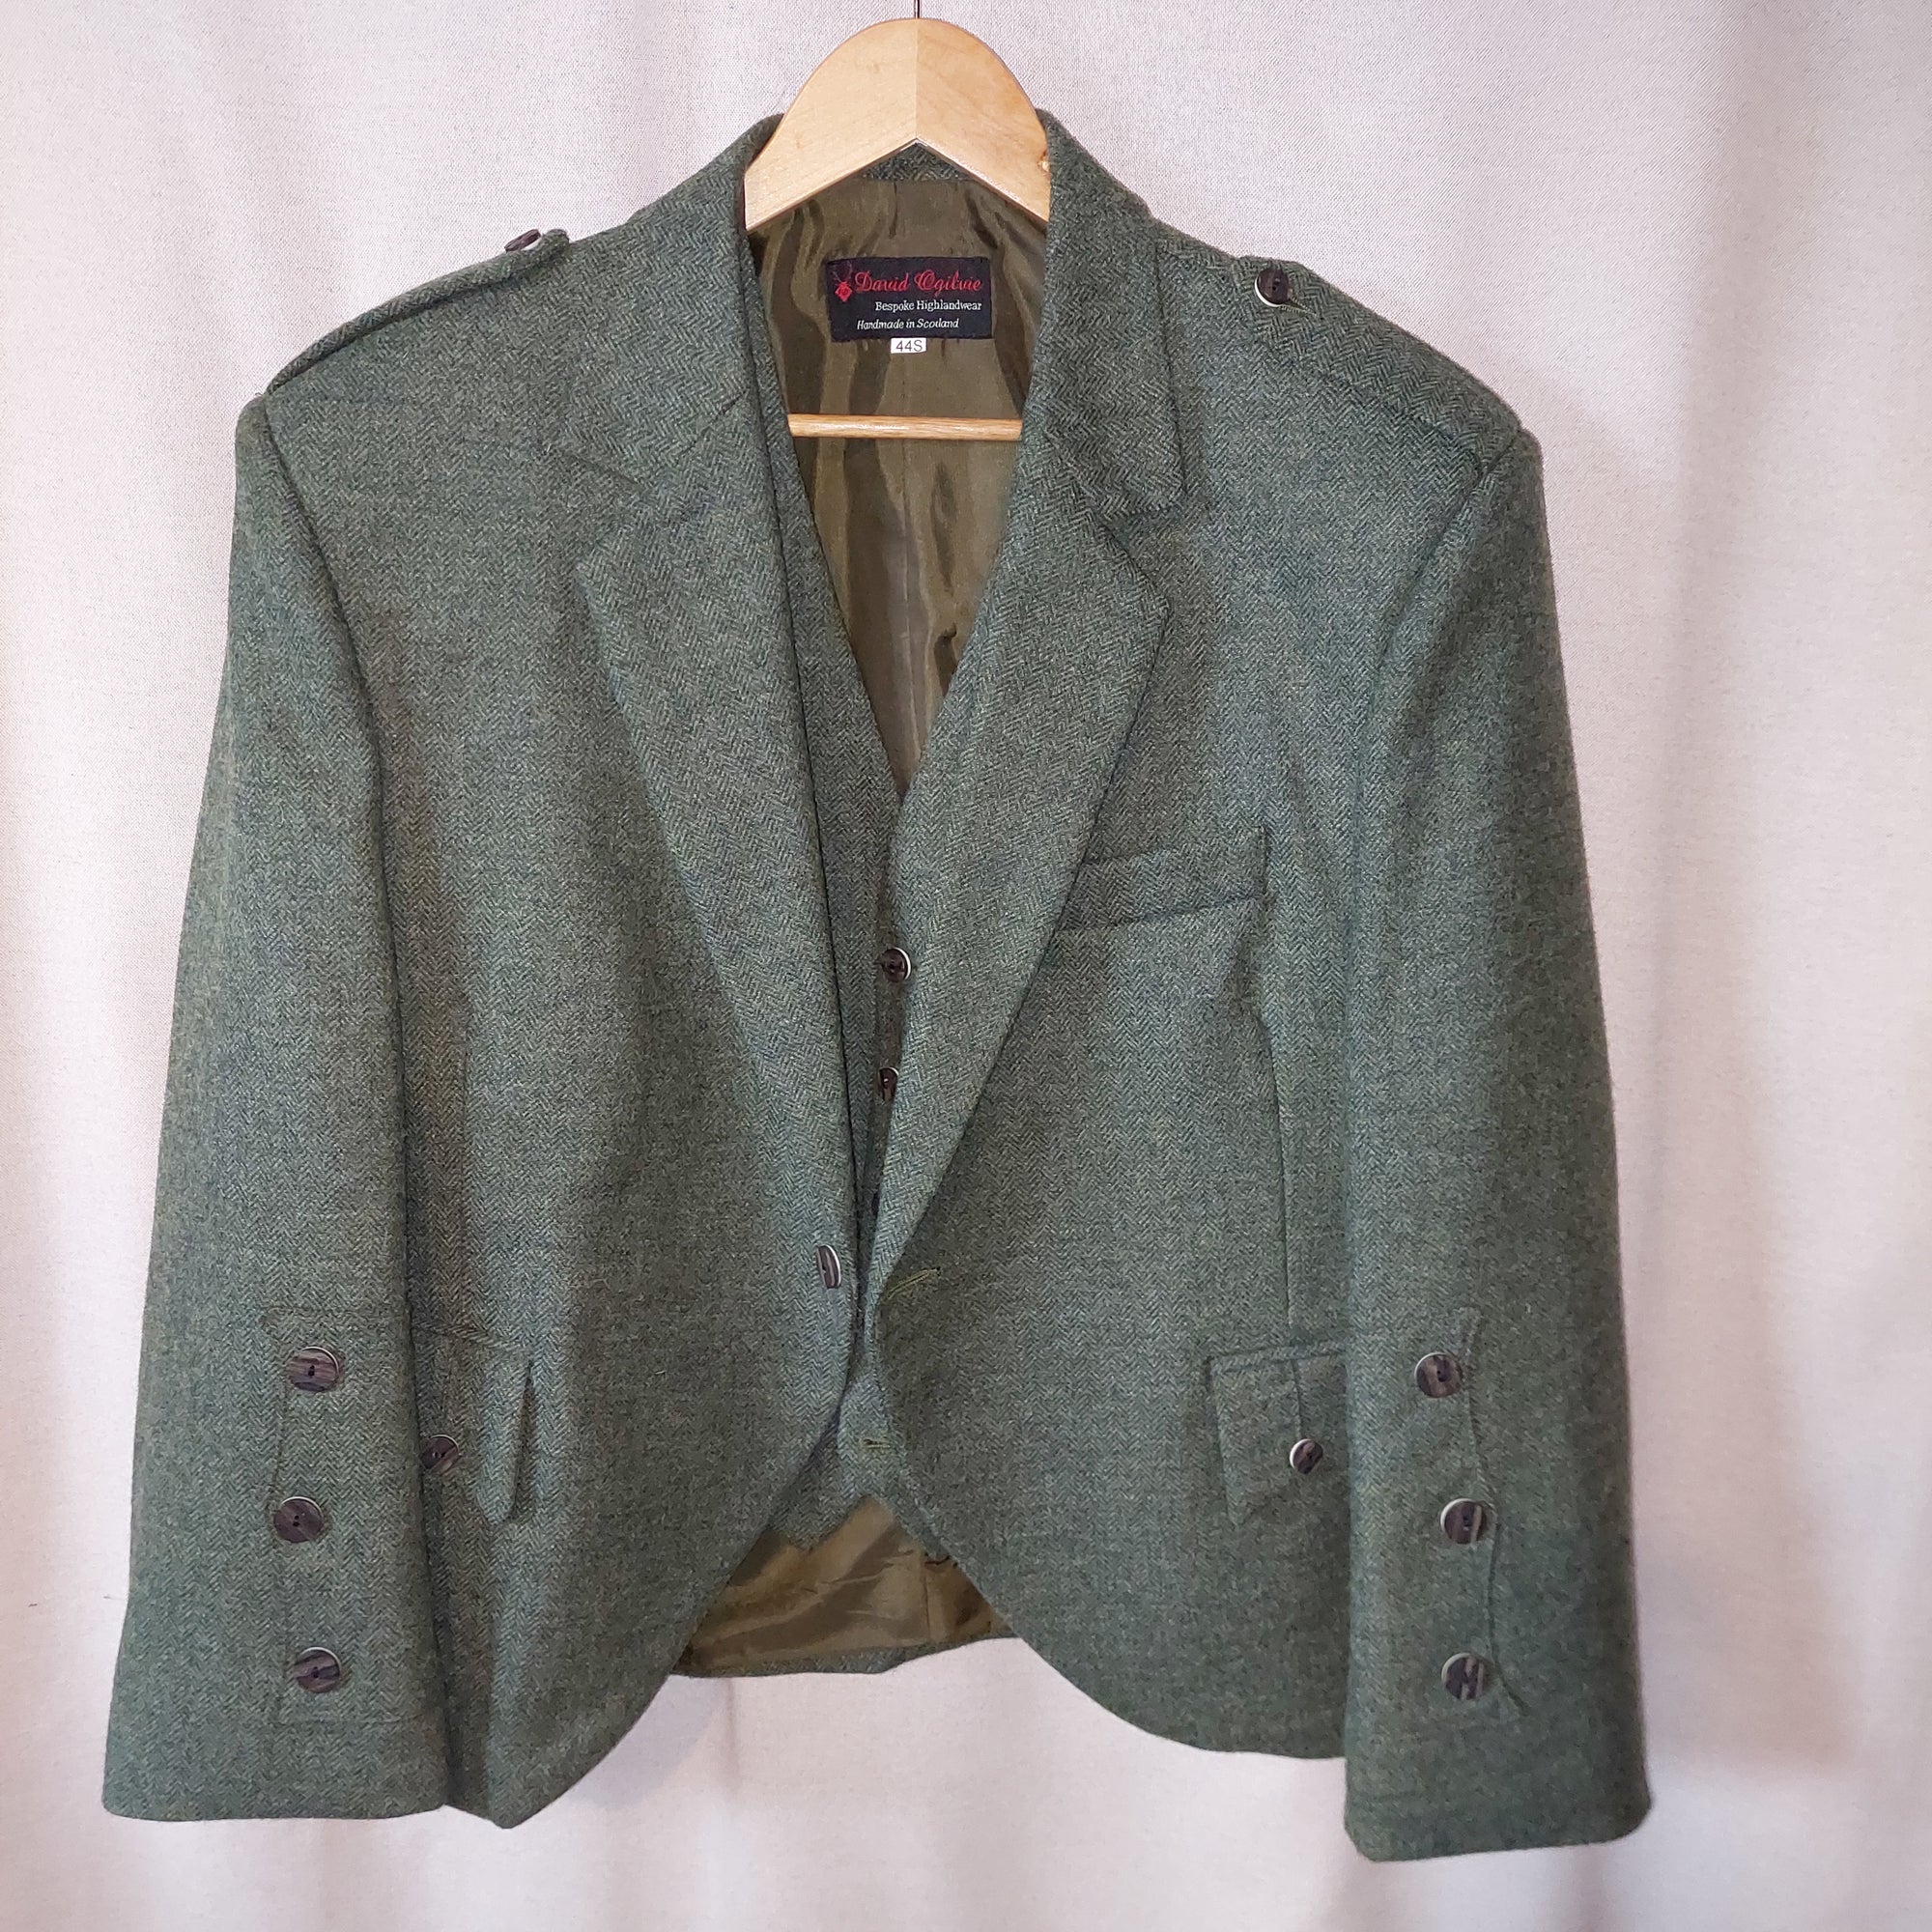 Braemar Tweed Jacket & Vest - Clearance Jacket (6) - Scots in Spirit